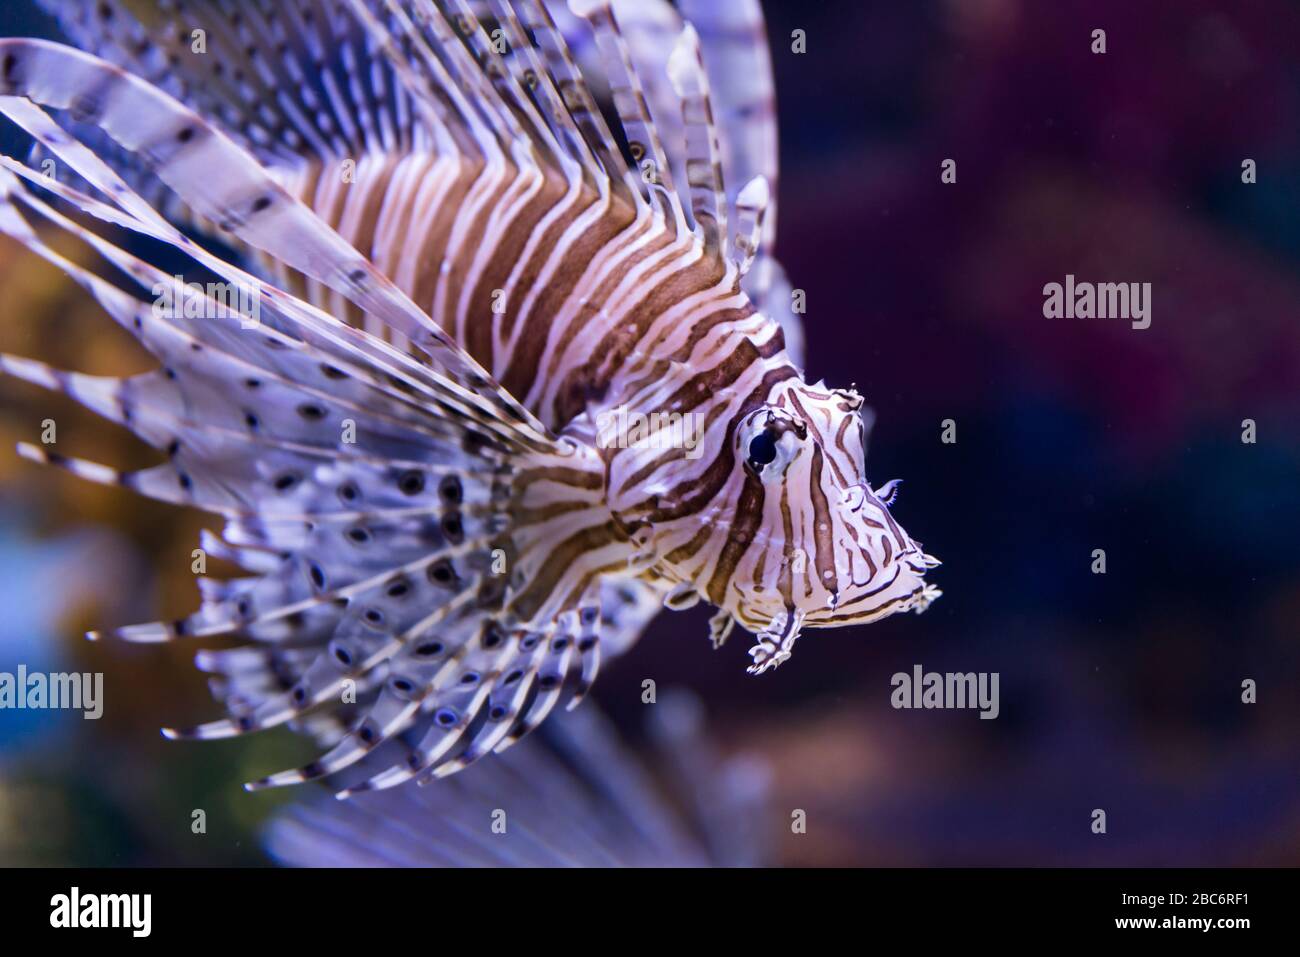 At Israel Aquarium in Jerusalem Stock Photo